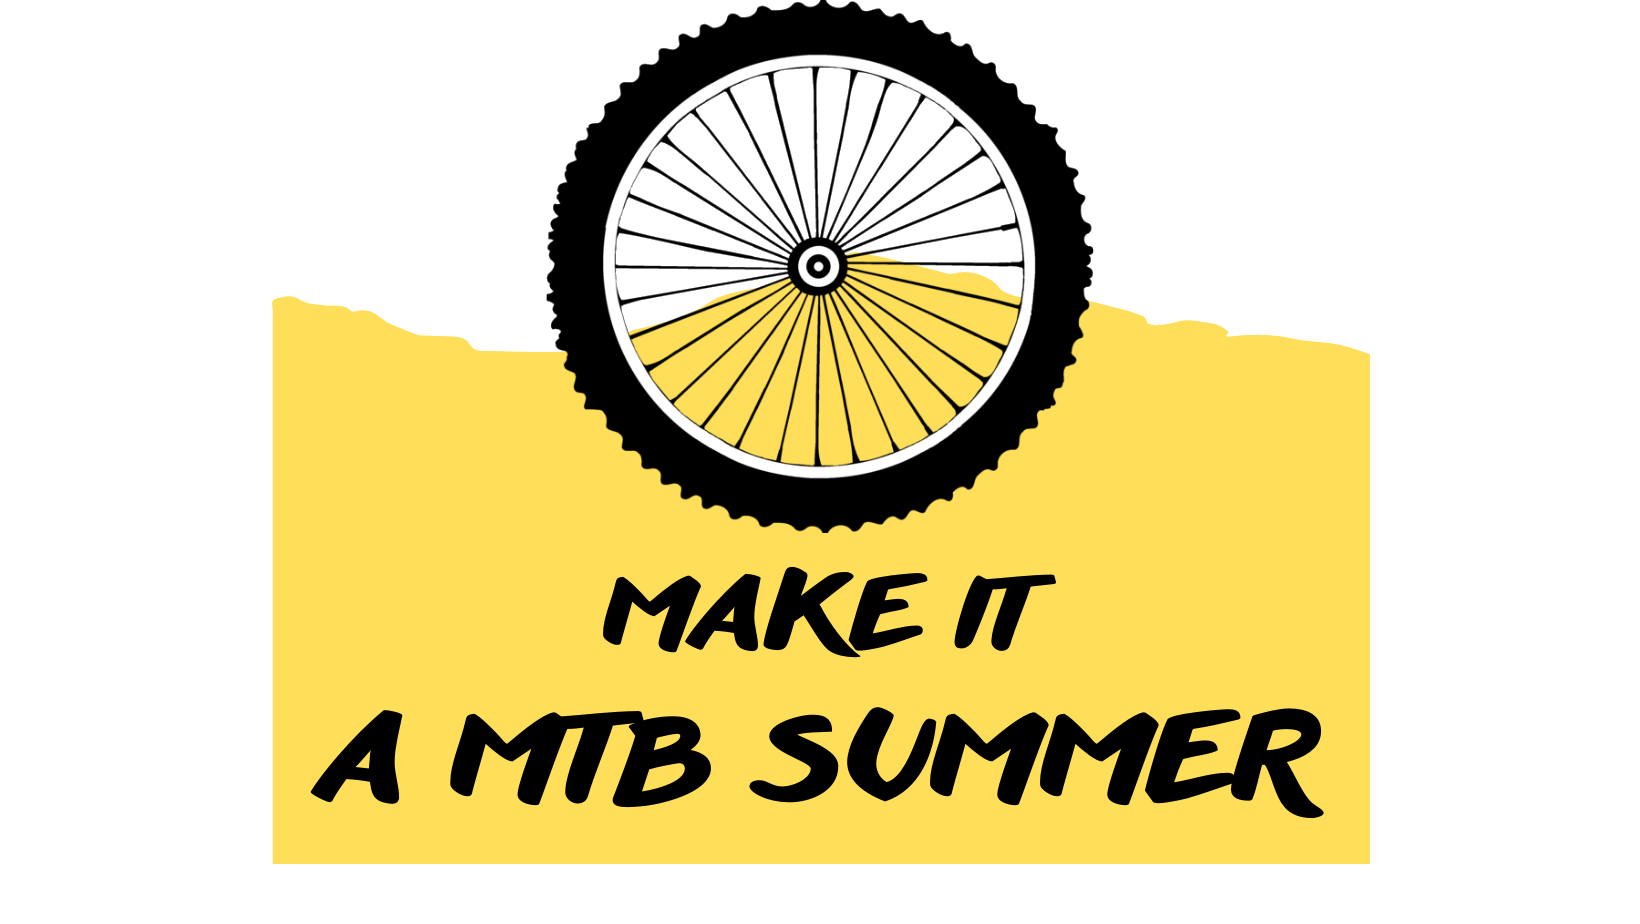 Make It a MTB Summer